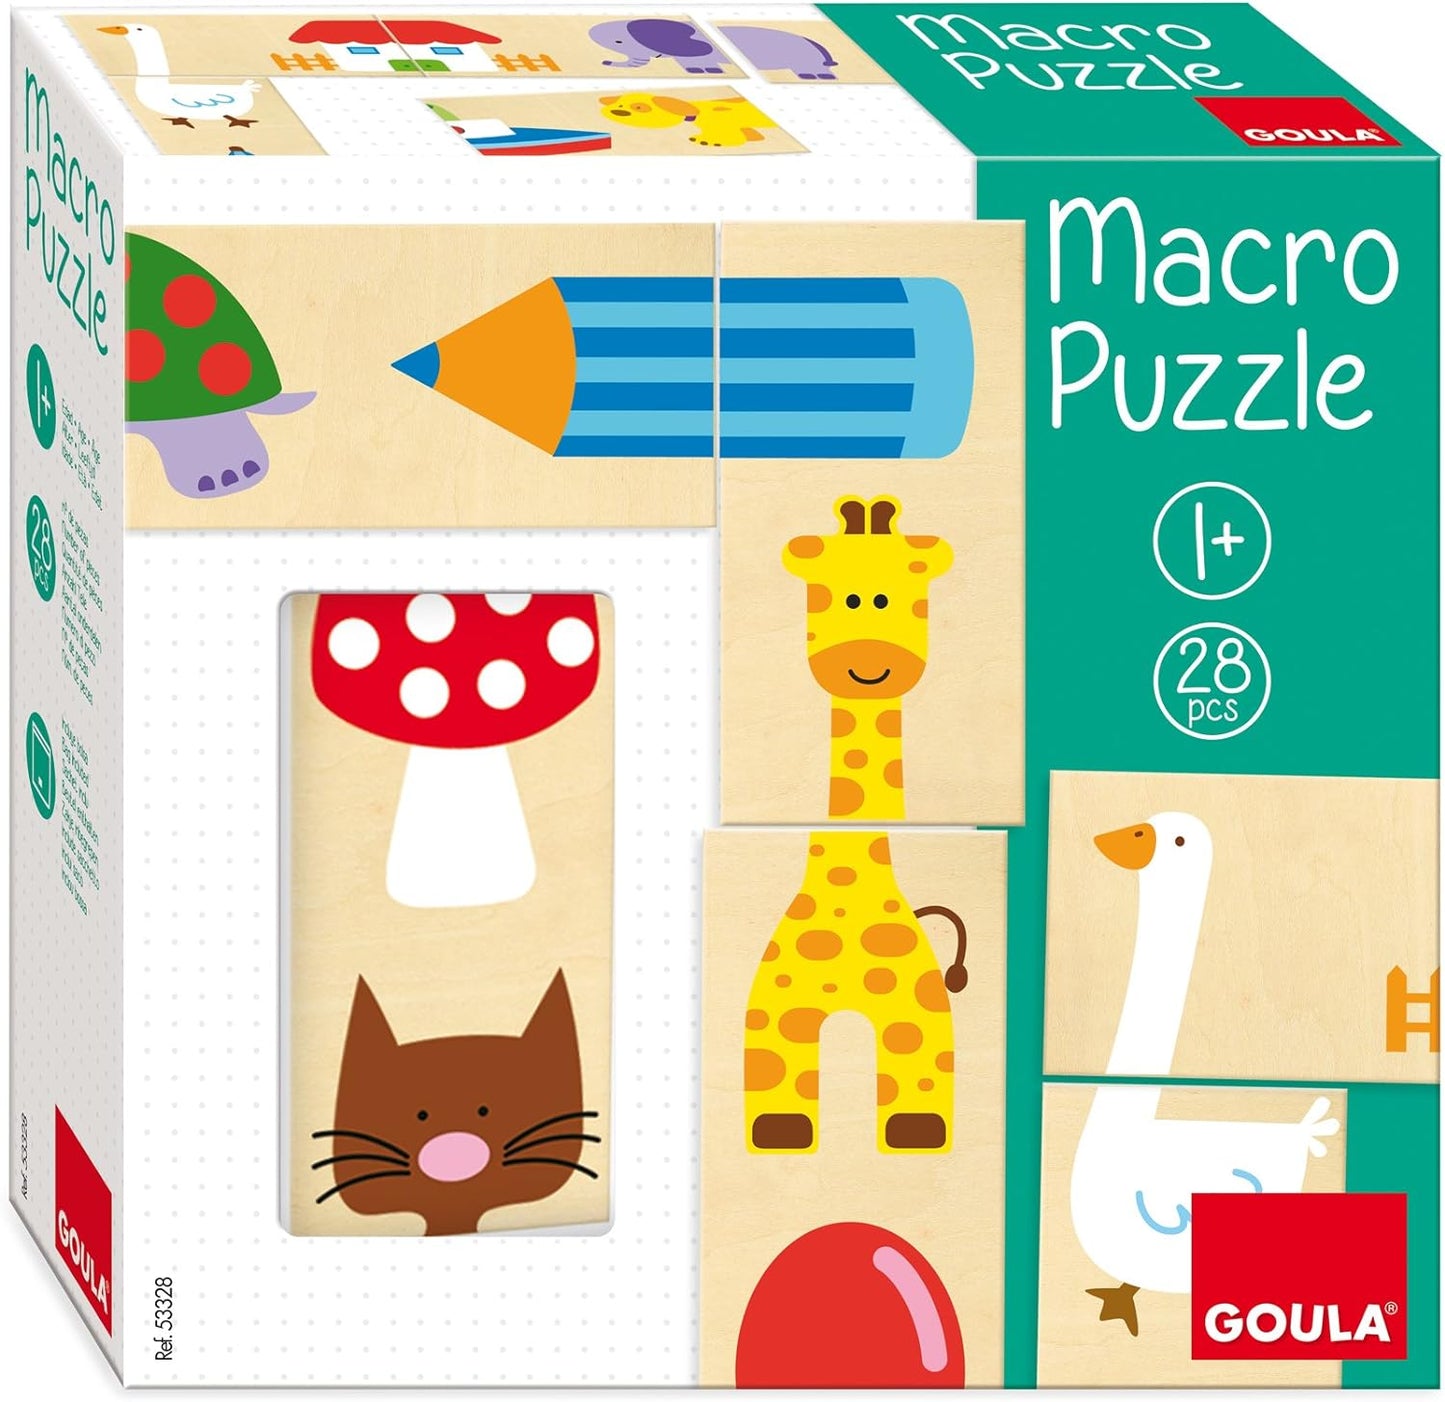 Goula Macro Puzzle Domino Game Large Size 大號拼圖多米諾配對遊戲